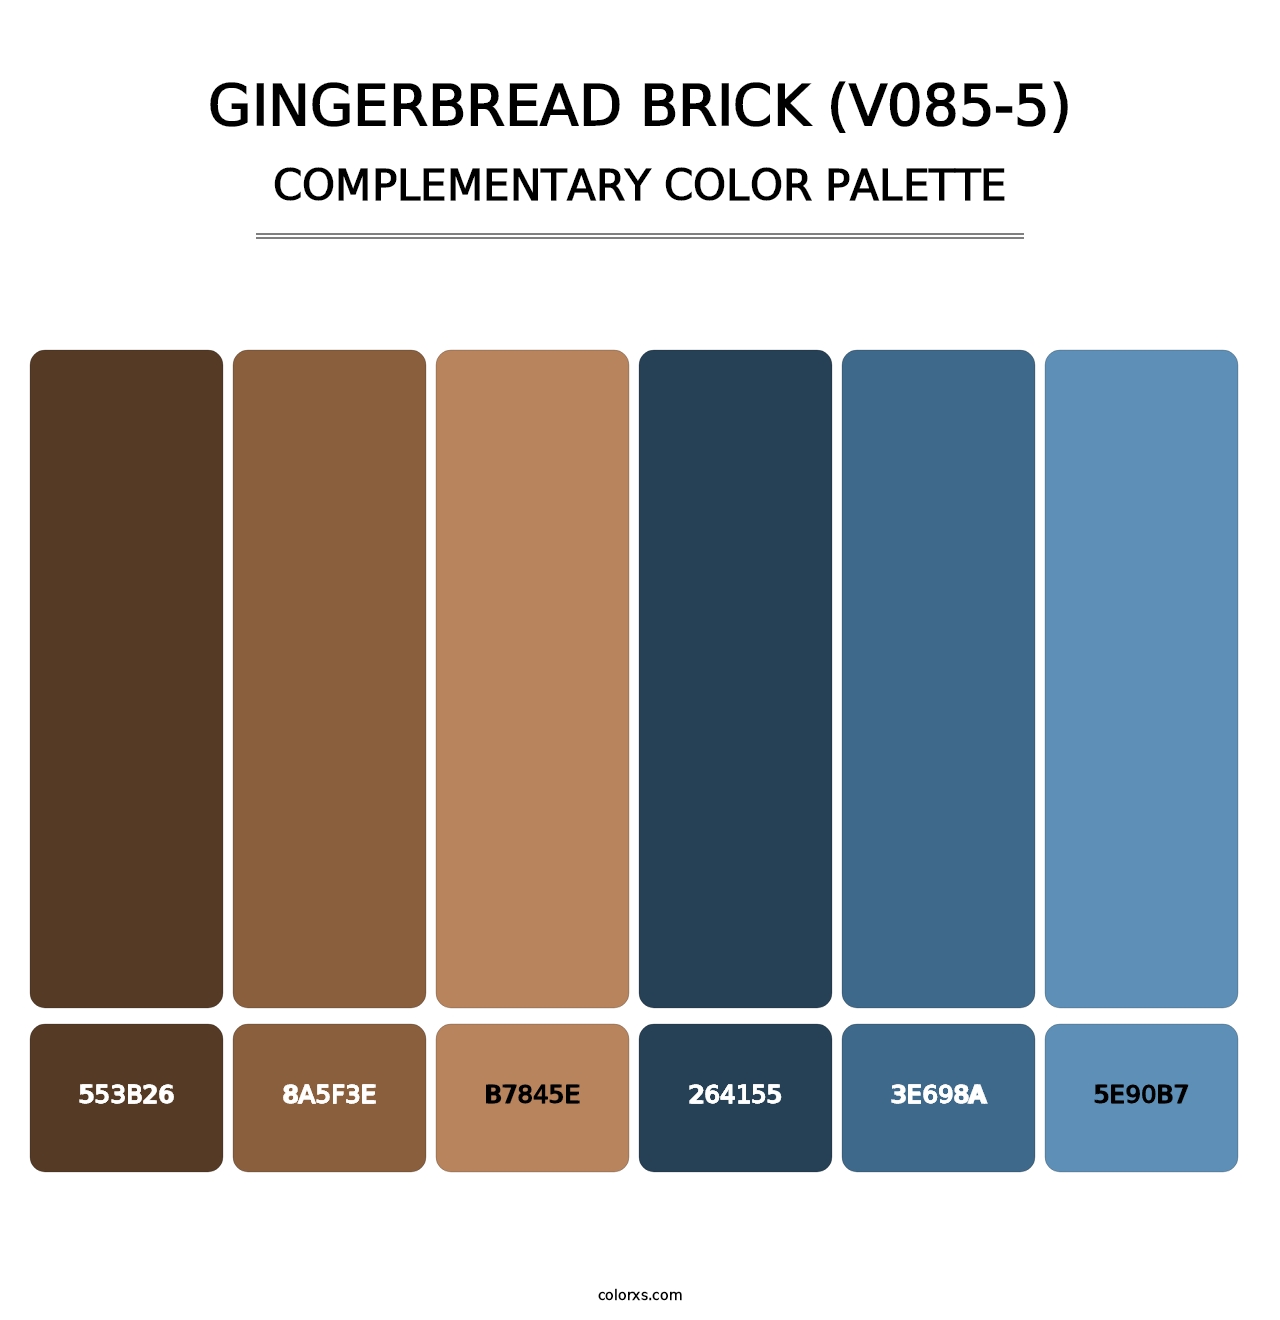 Gingerbread Brick (V085-5) - Complementary Color Palette